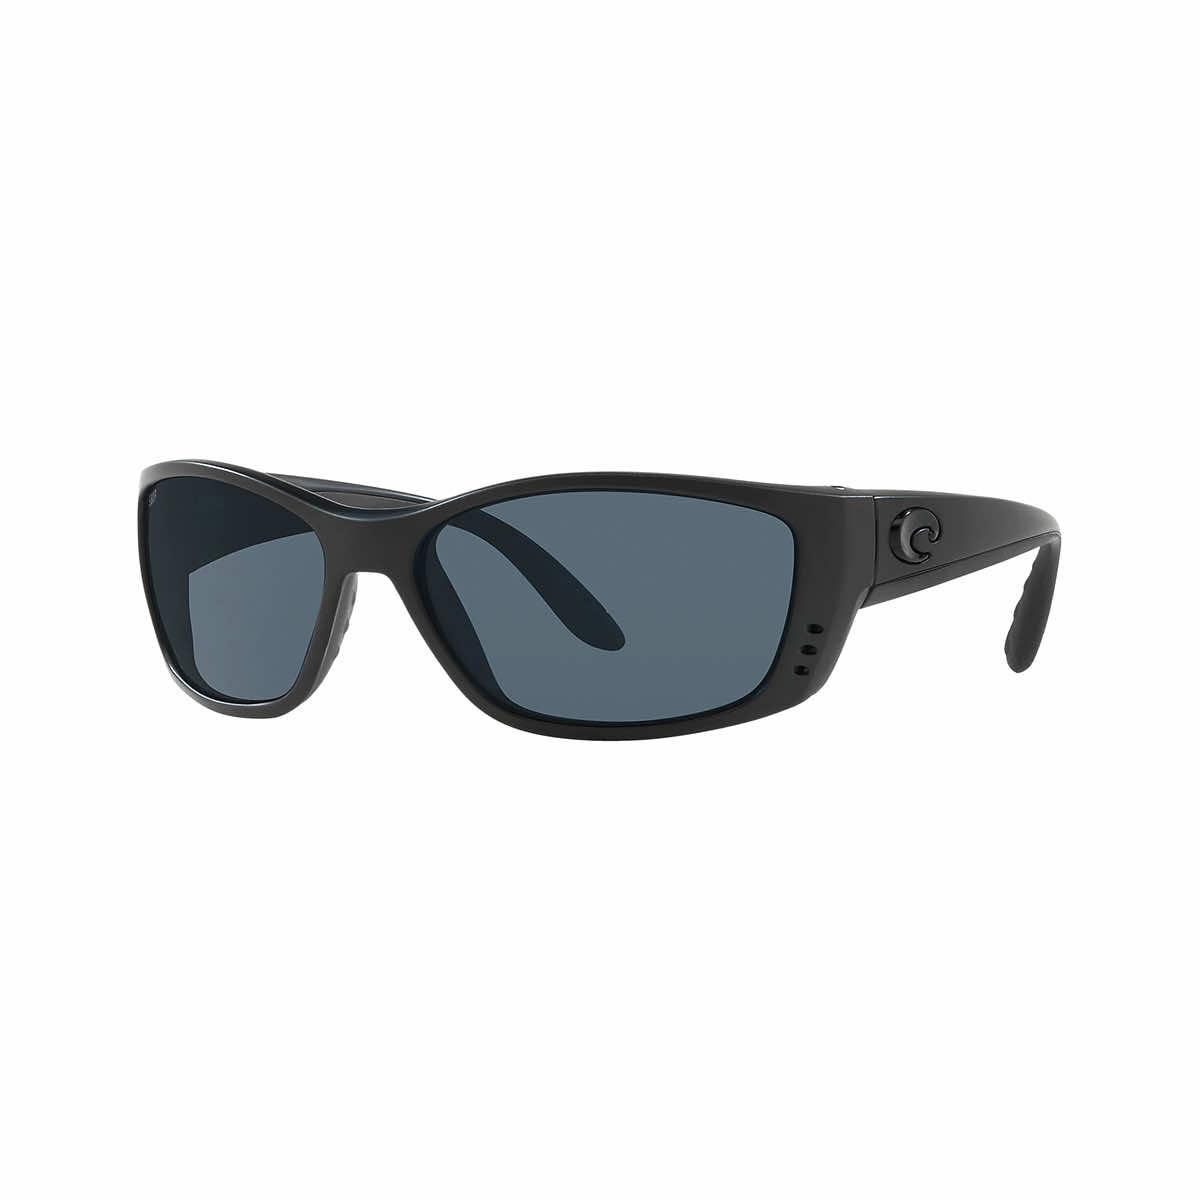  Fisch 580p Sunglasses - Polarized Plastic